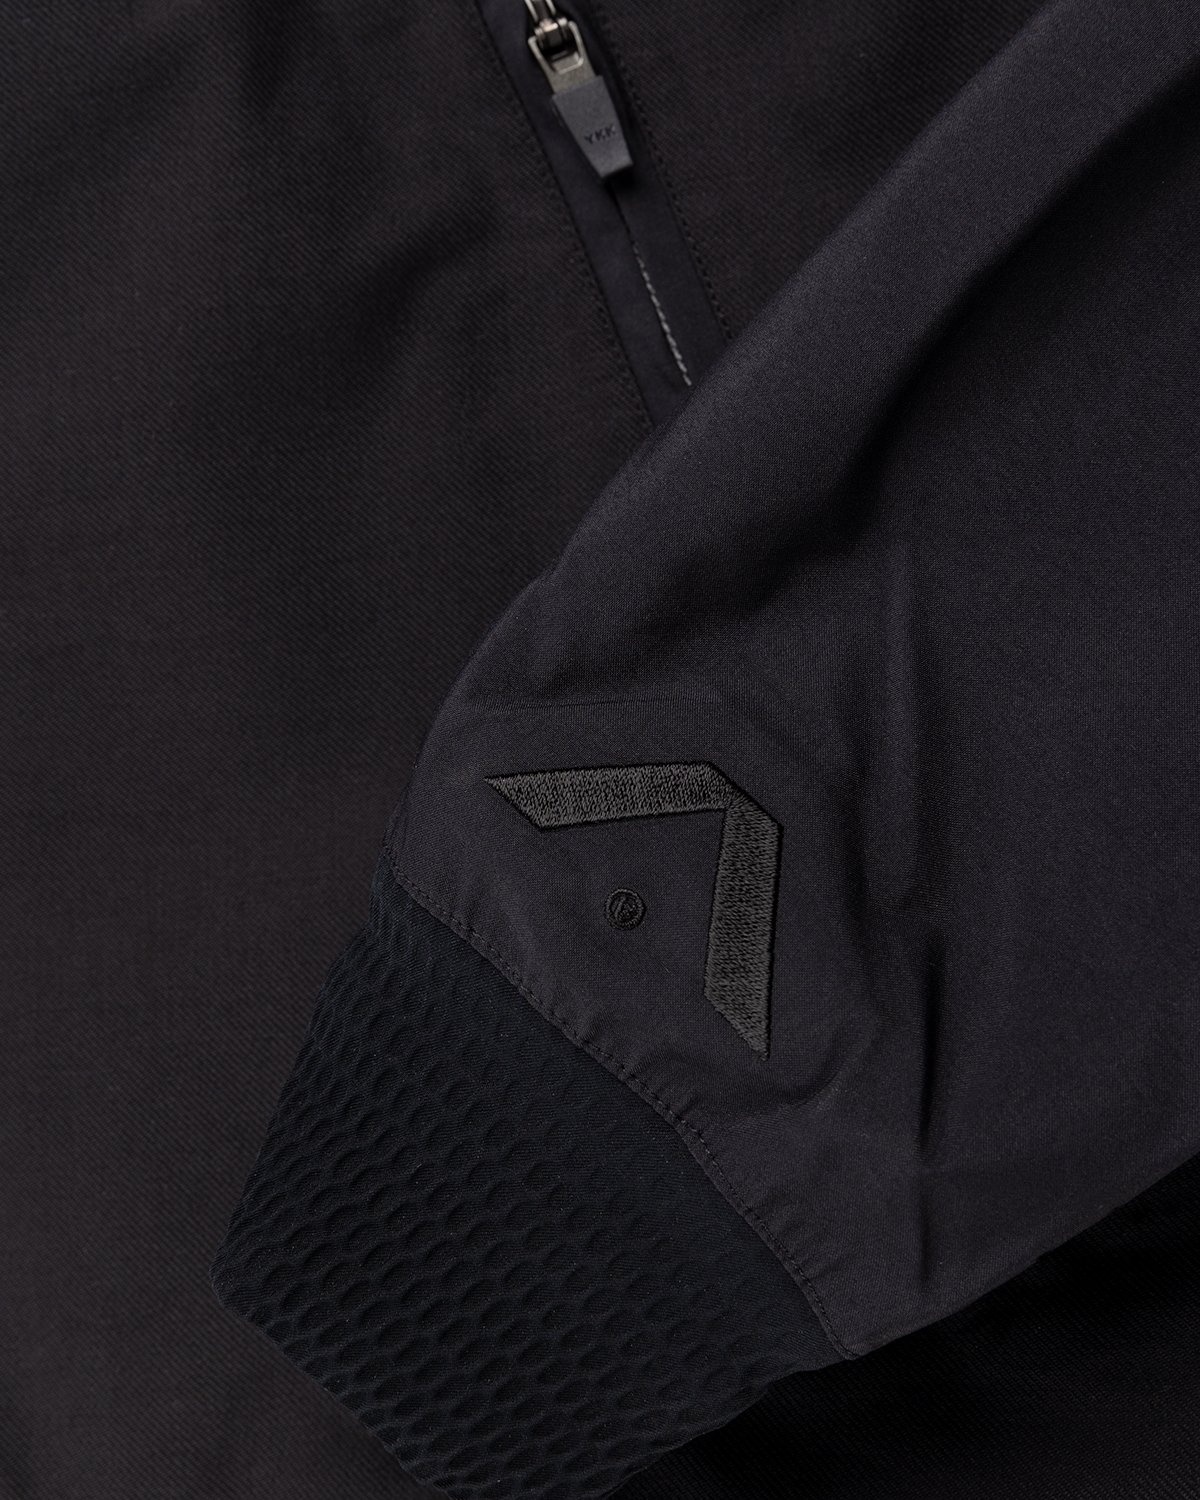 ACRONYM – J94-VT Black/Black - Outerwear - Black - Image 7